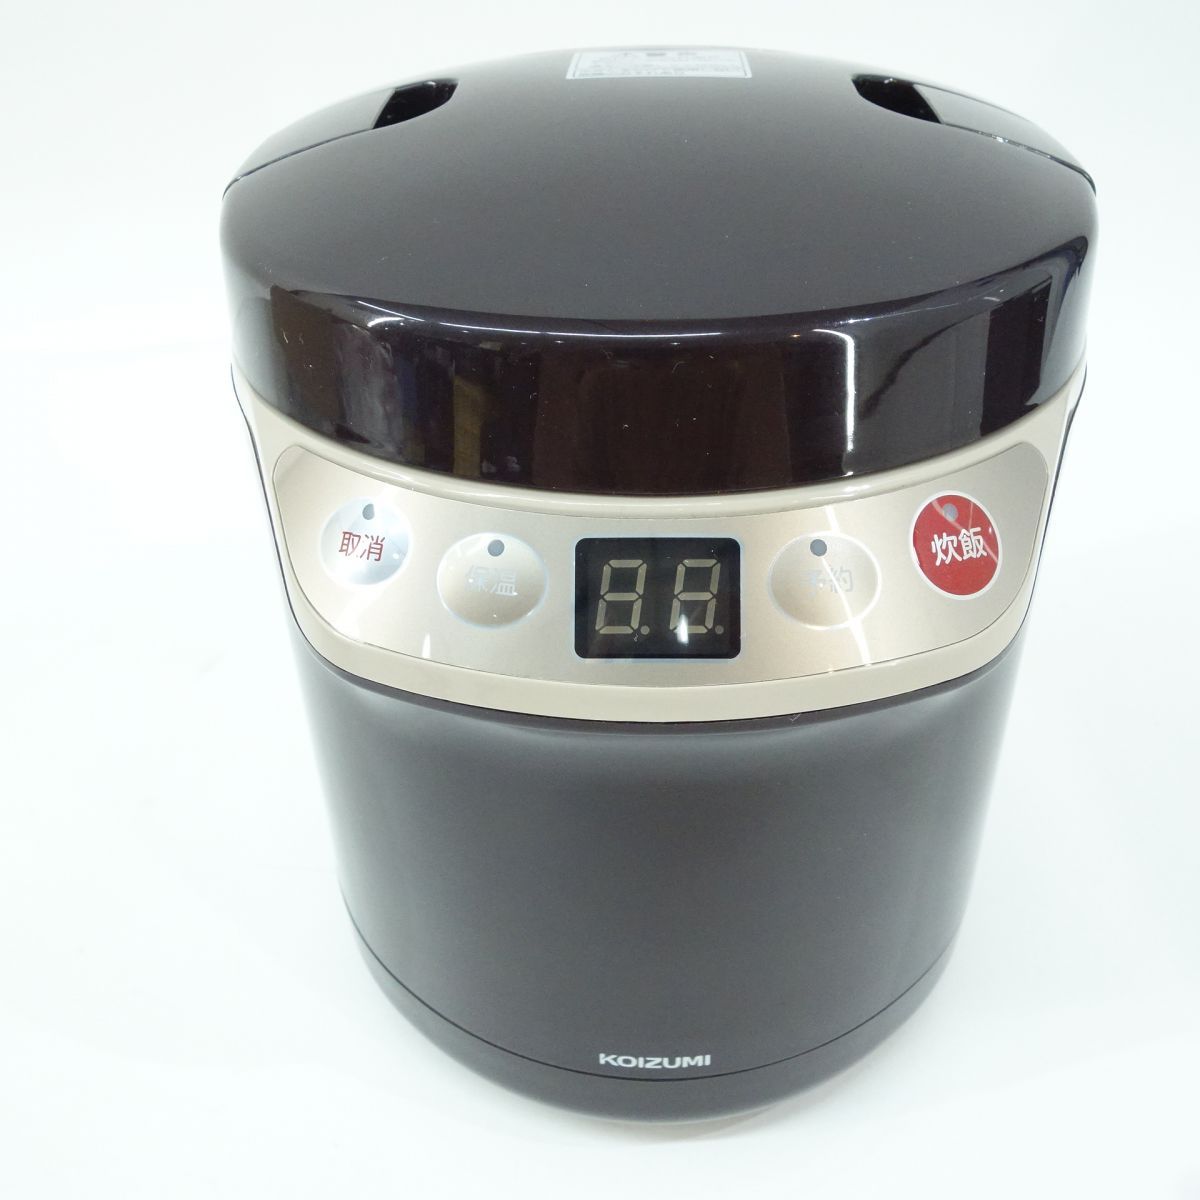 KOIZUMI コイズミ ライスクッカーミニ 小型炊飯器 KSC-1511/T ブラウン 